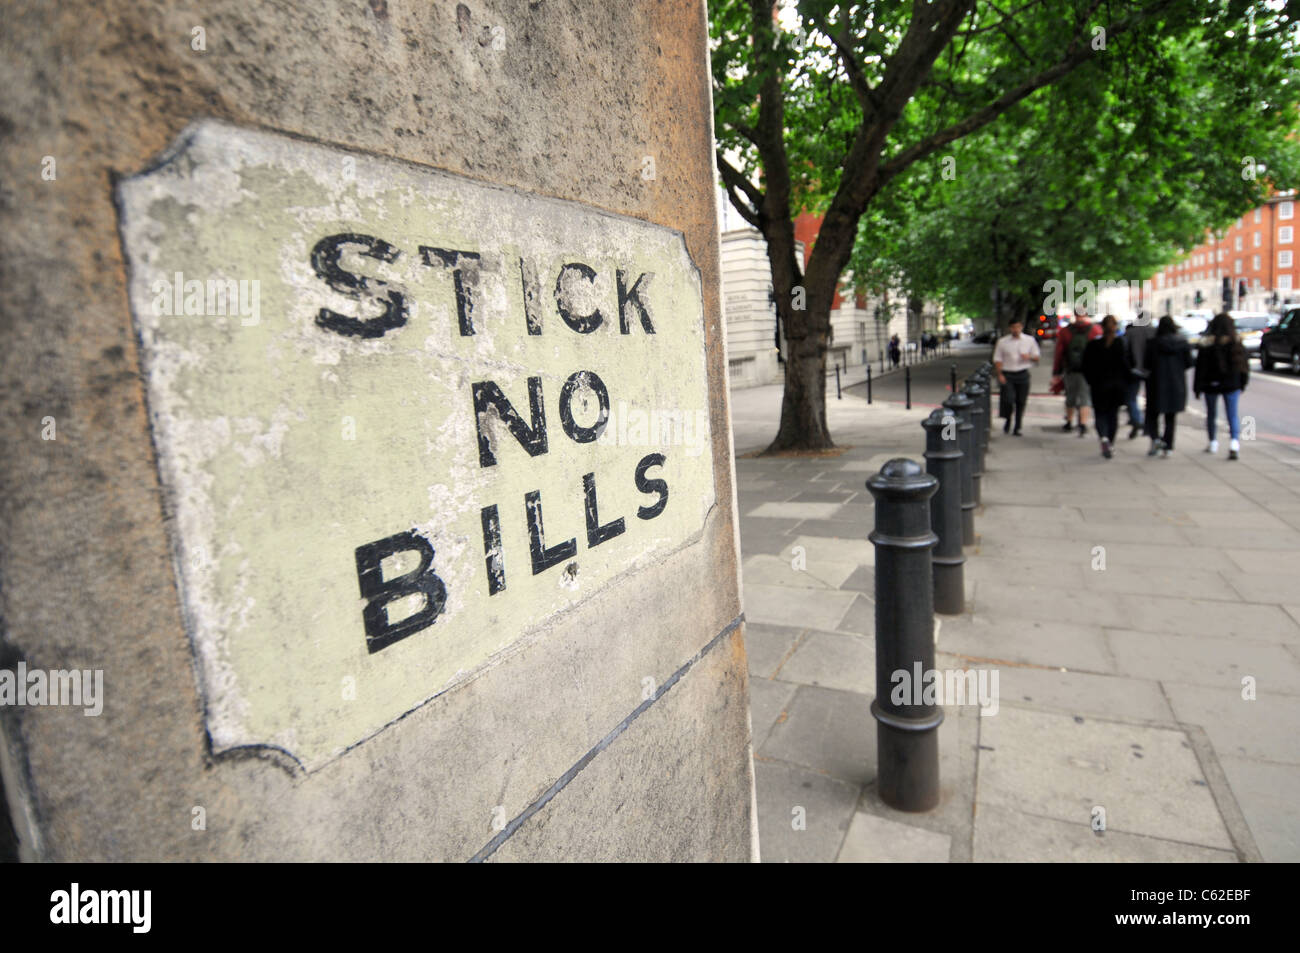 Stick No Bills sign, London, Britain, UK Stock Photo